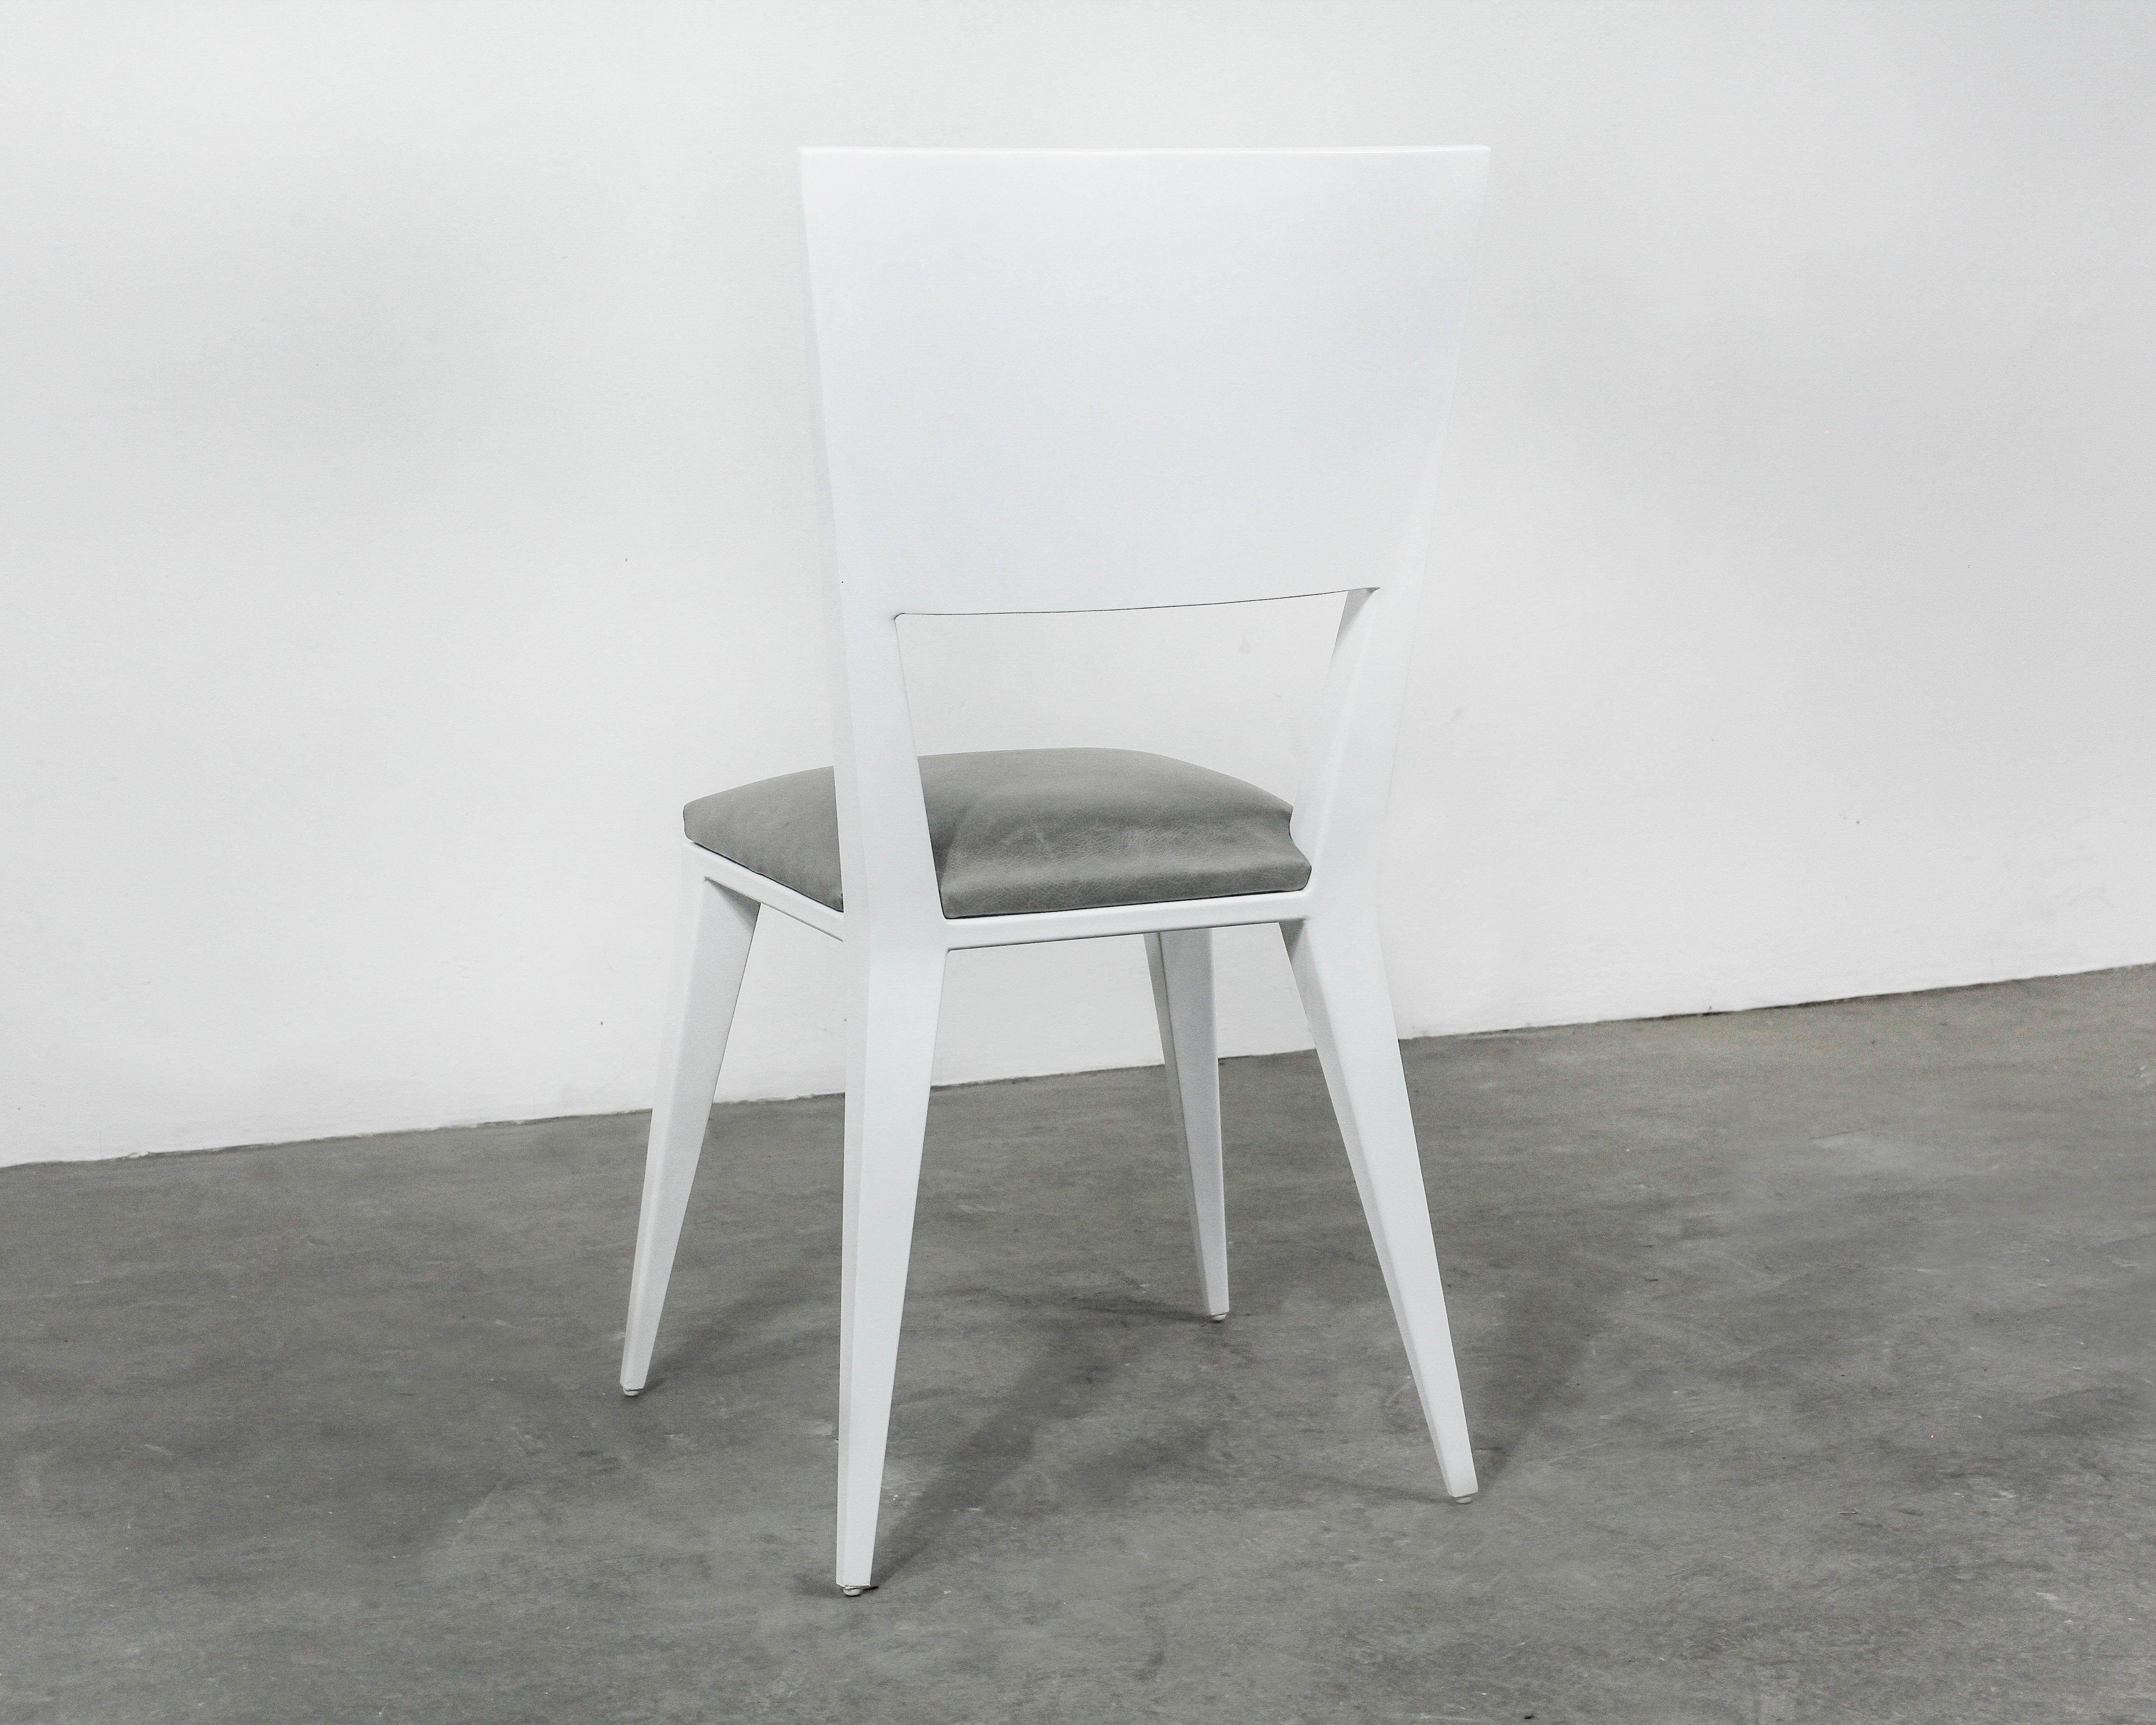 bianco manufacturing company chairs